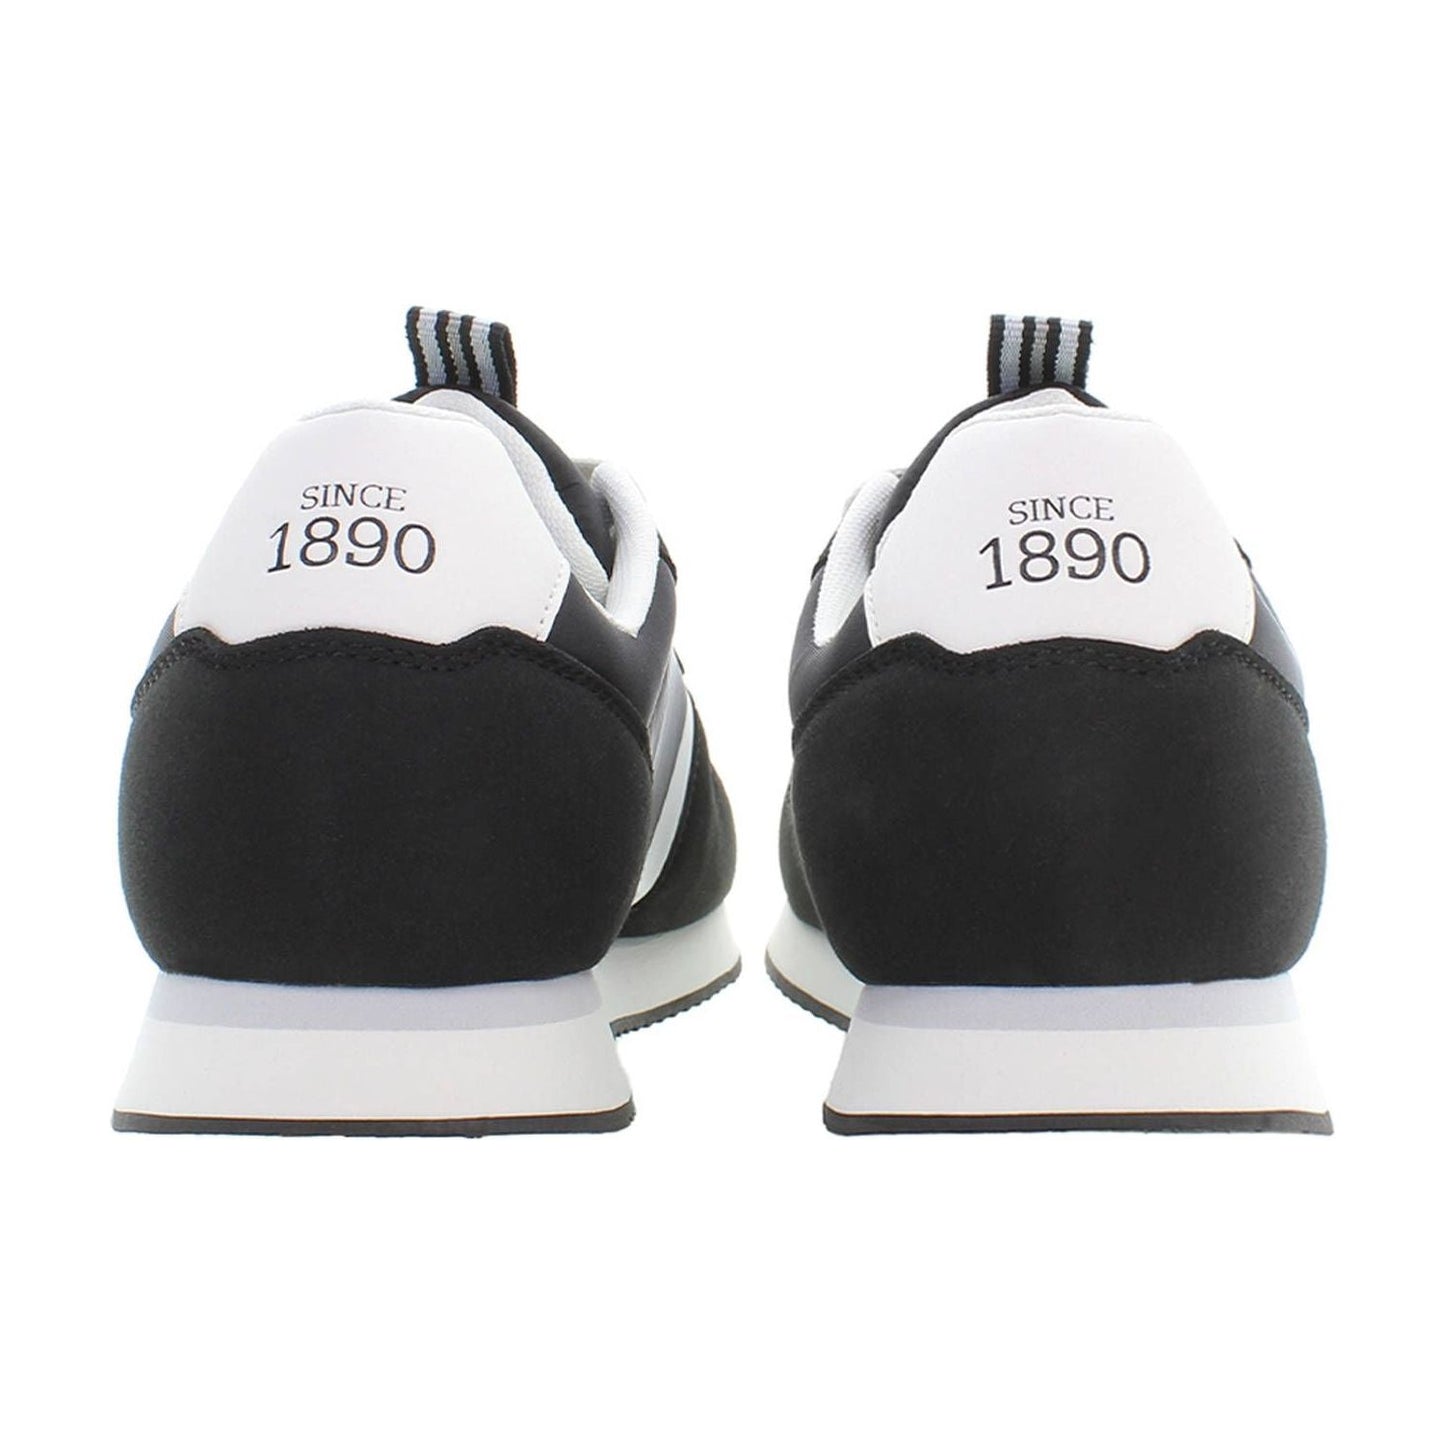 U.S. POLO ASSN.Sleek Black Sneakers with Contrast AccentsMcRichard Designer Brands£89.00